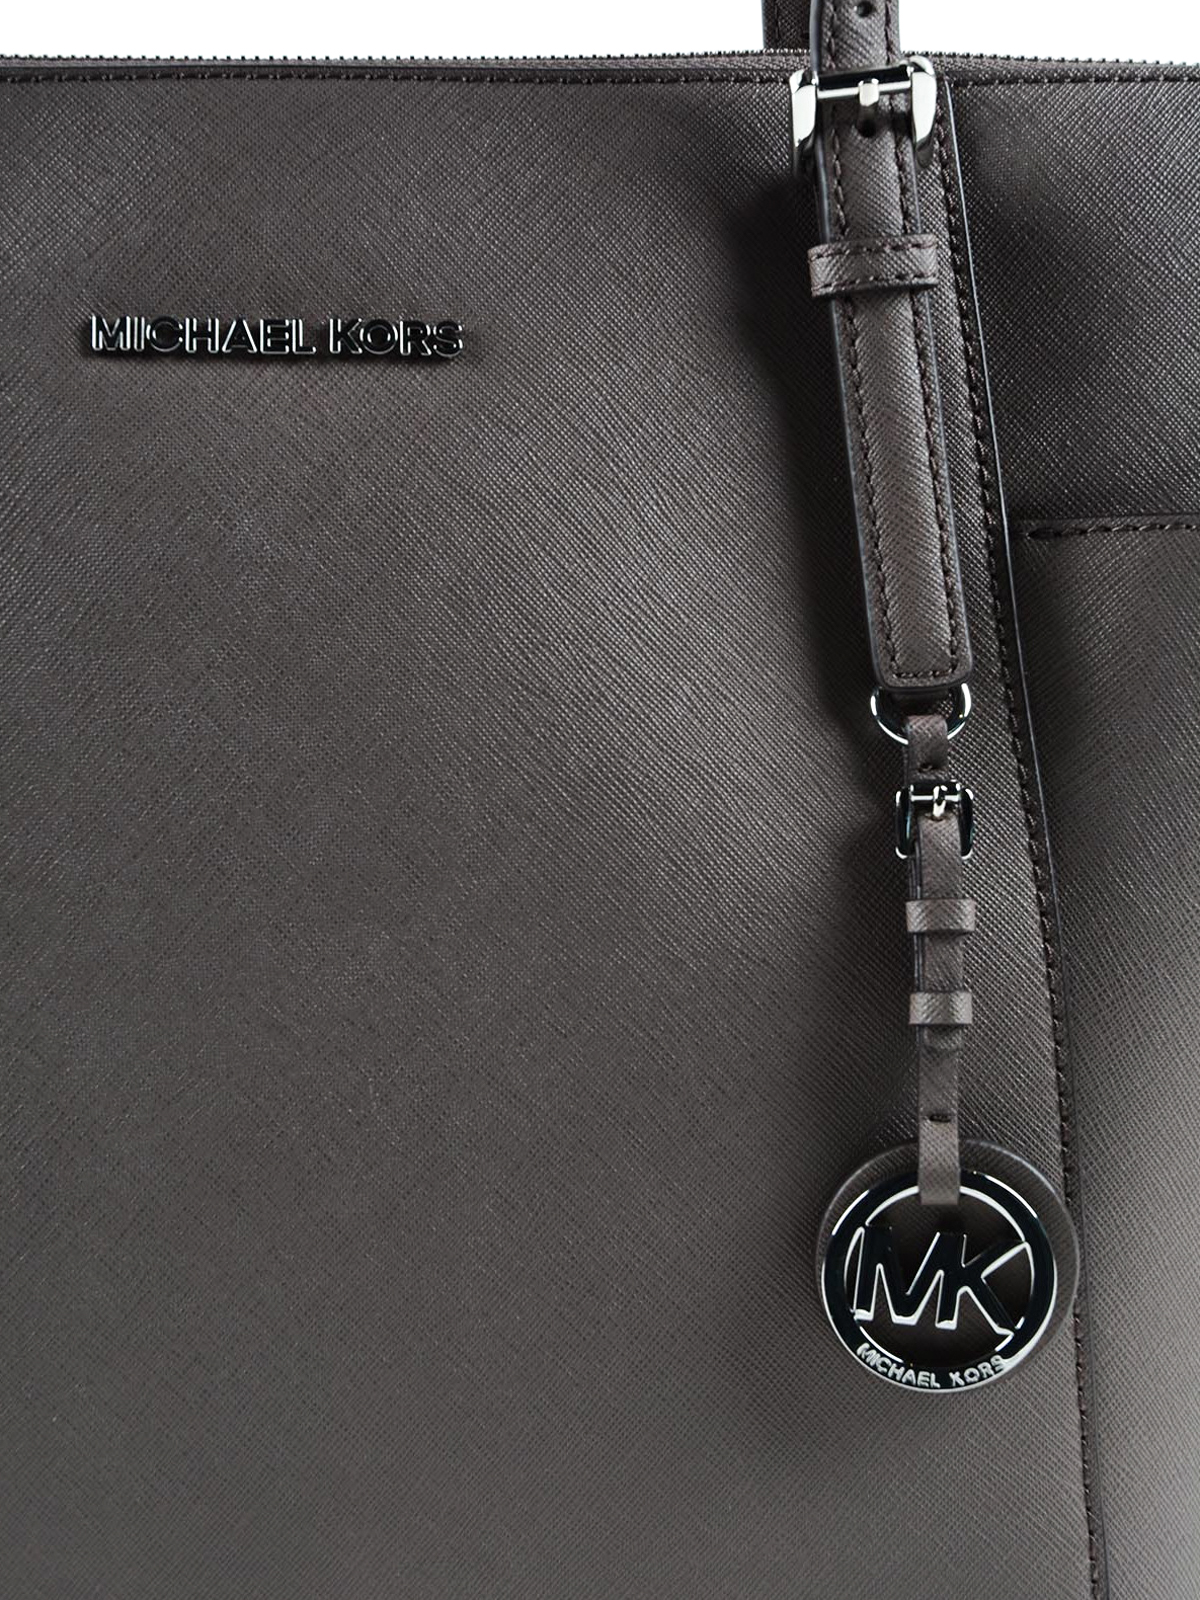 Totes bags Michael Kors - Jet Set large saffiano leather tote -  30F4STTT9L513